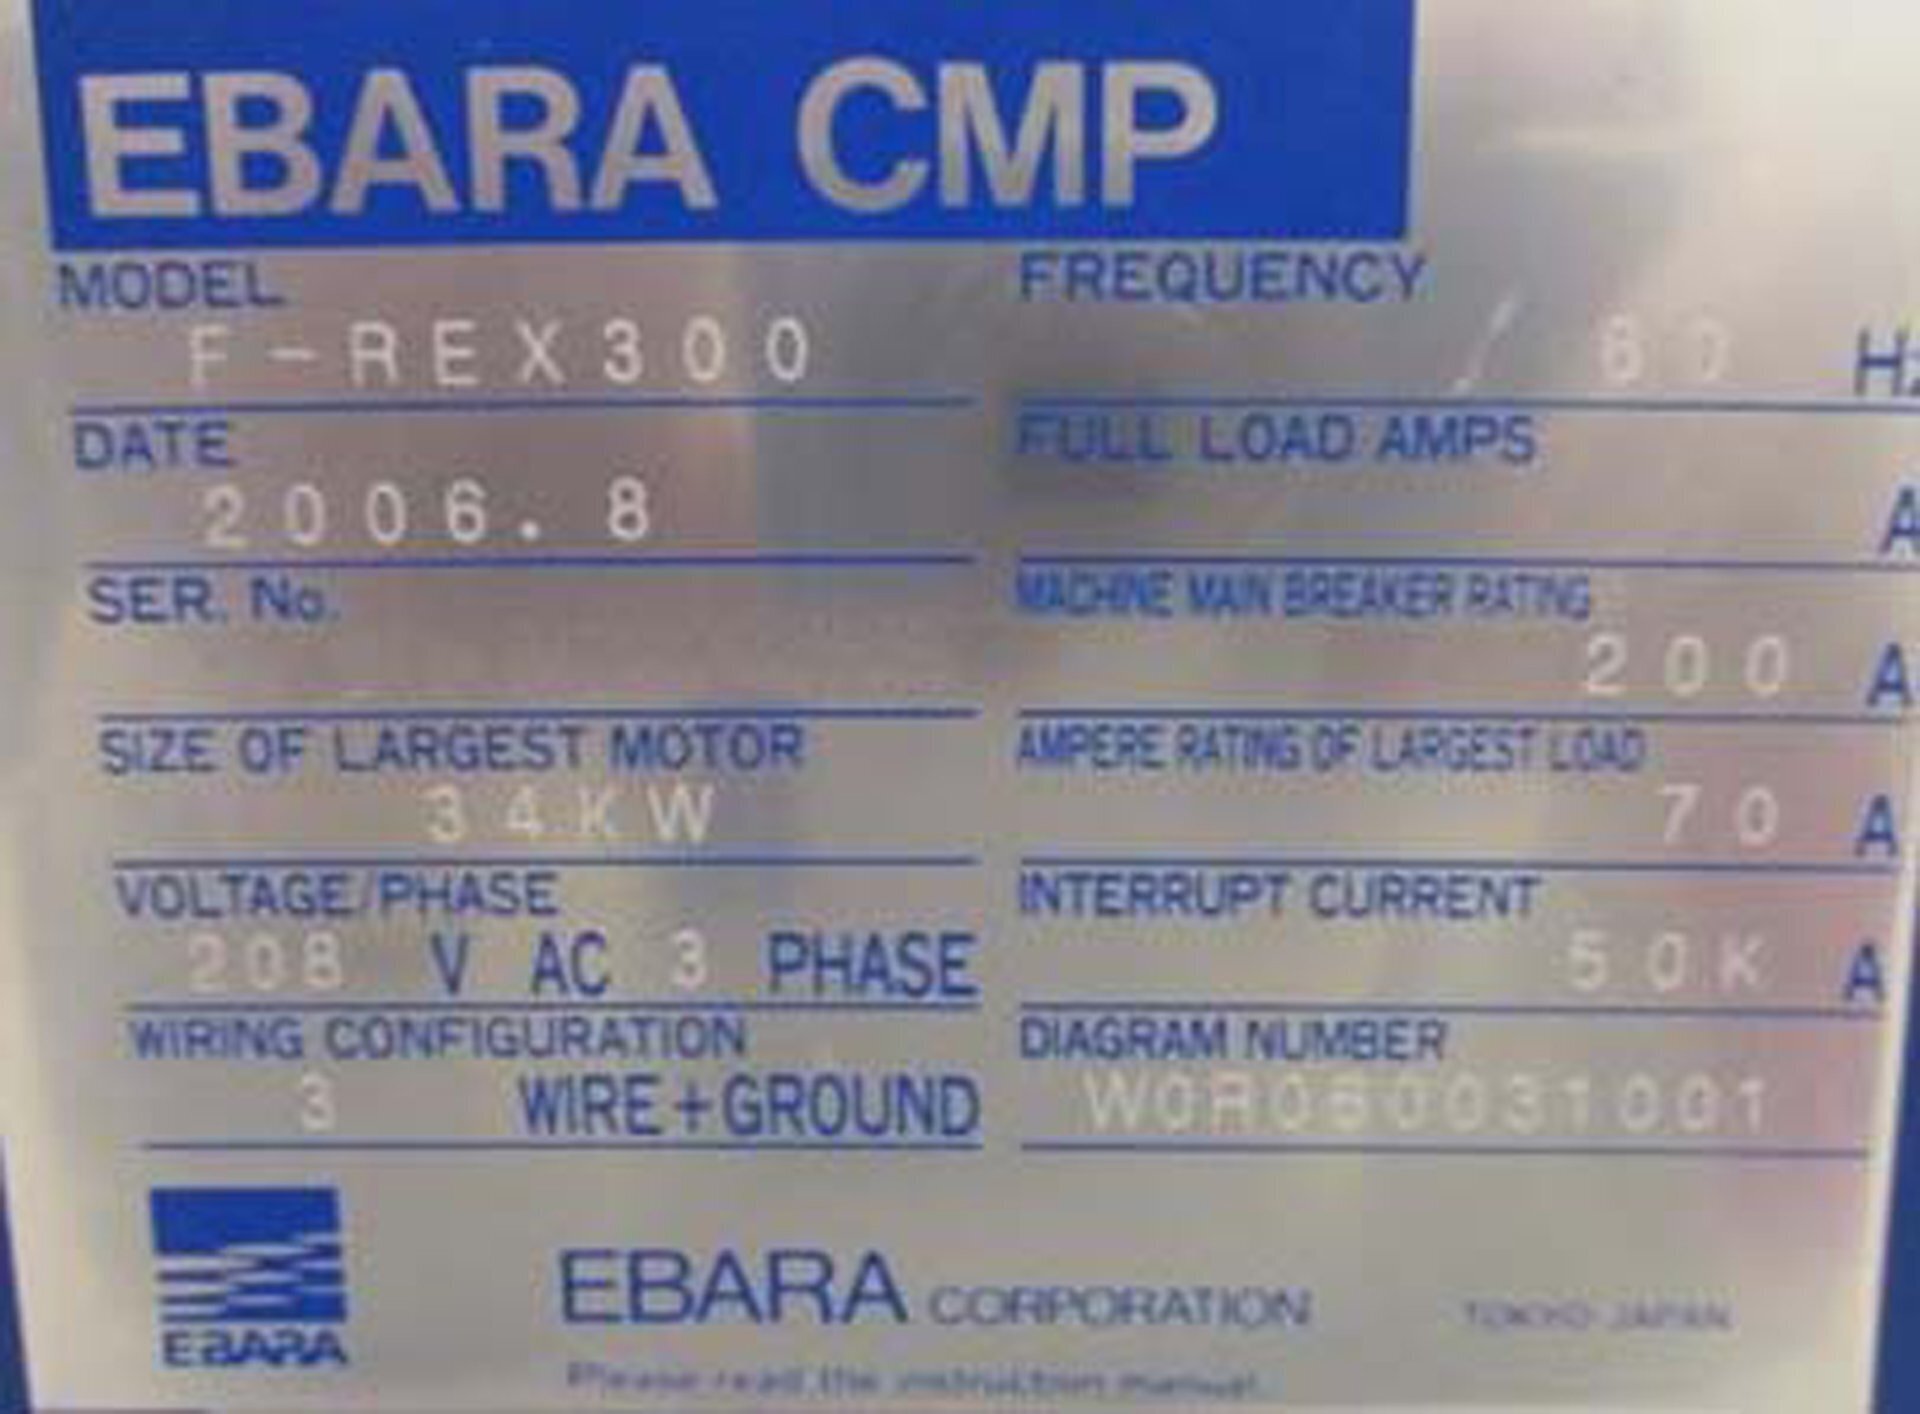 EBARA Frex 300 익숙한 판매용 가격 #9313556, 2006 > 사다 from CAE